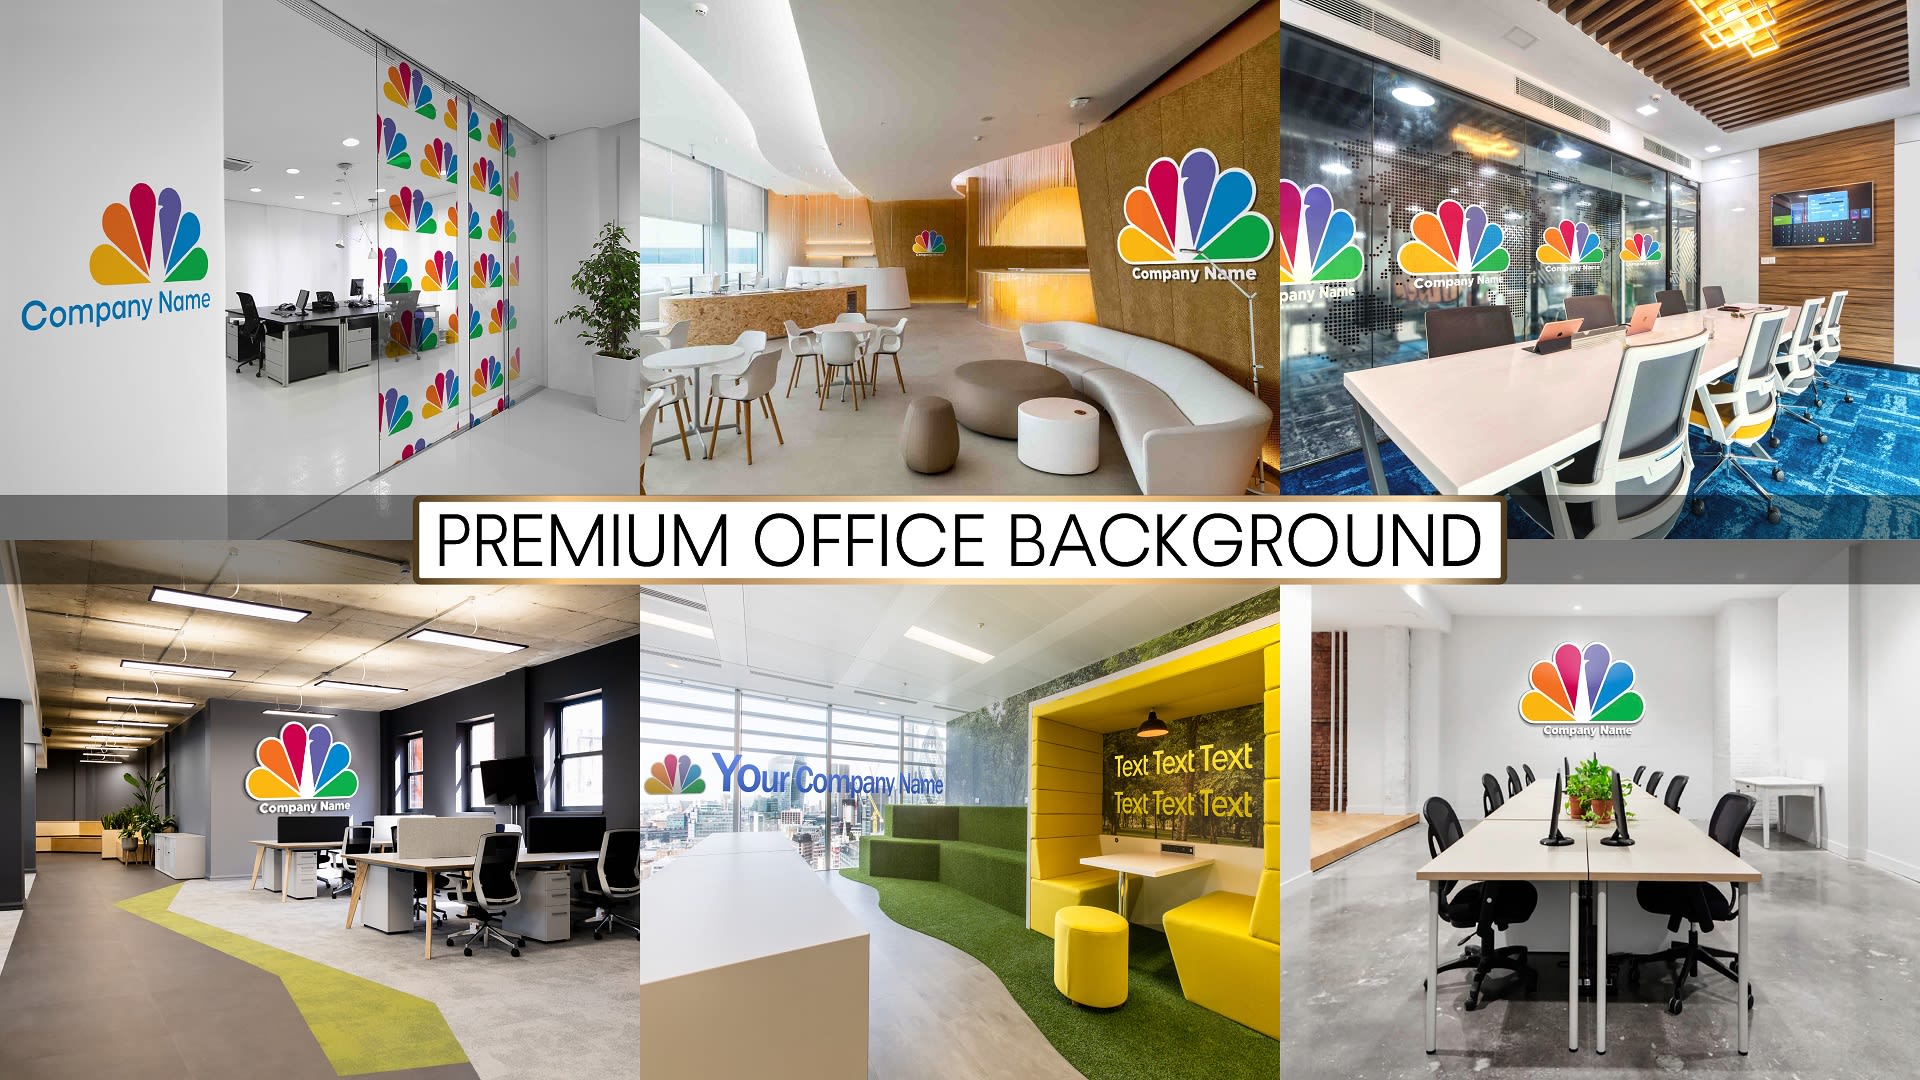 Luxury Office Background Images - Free Download on Freepik